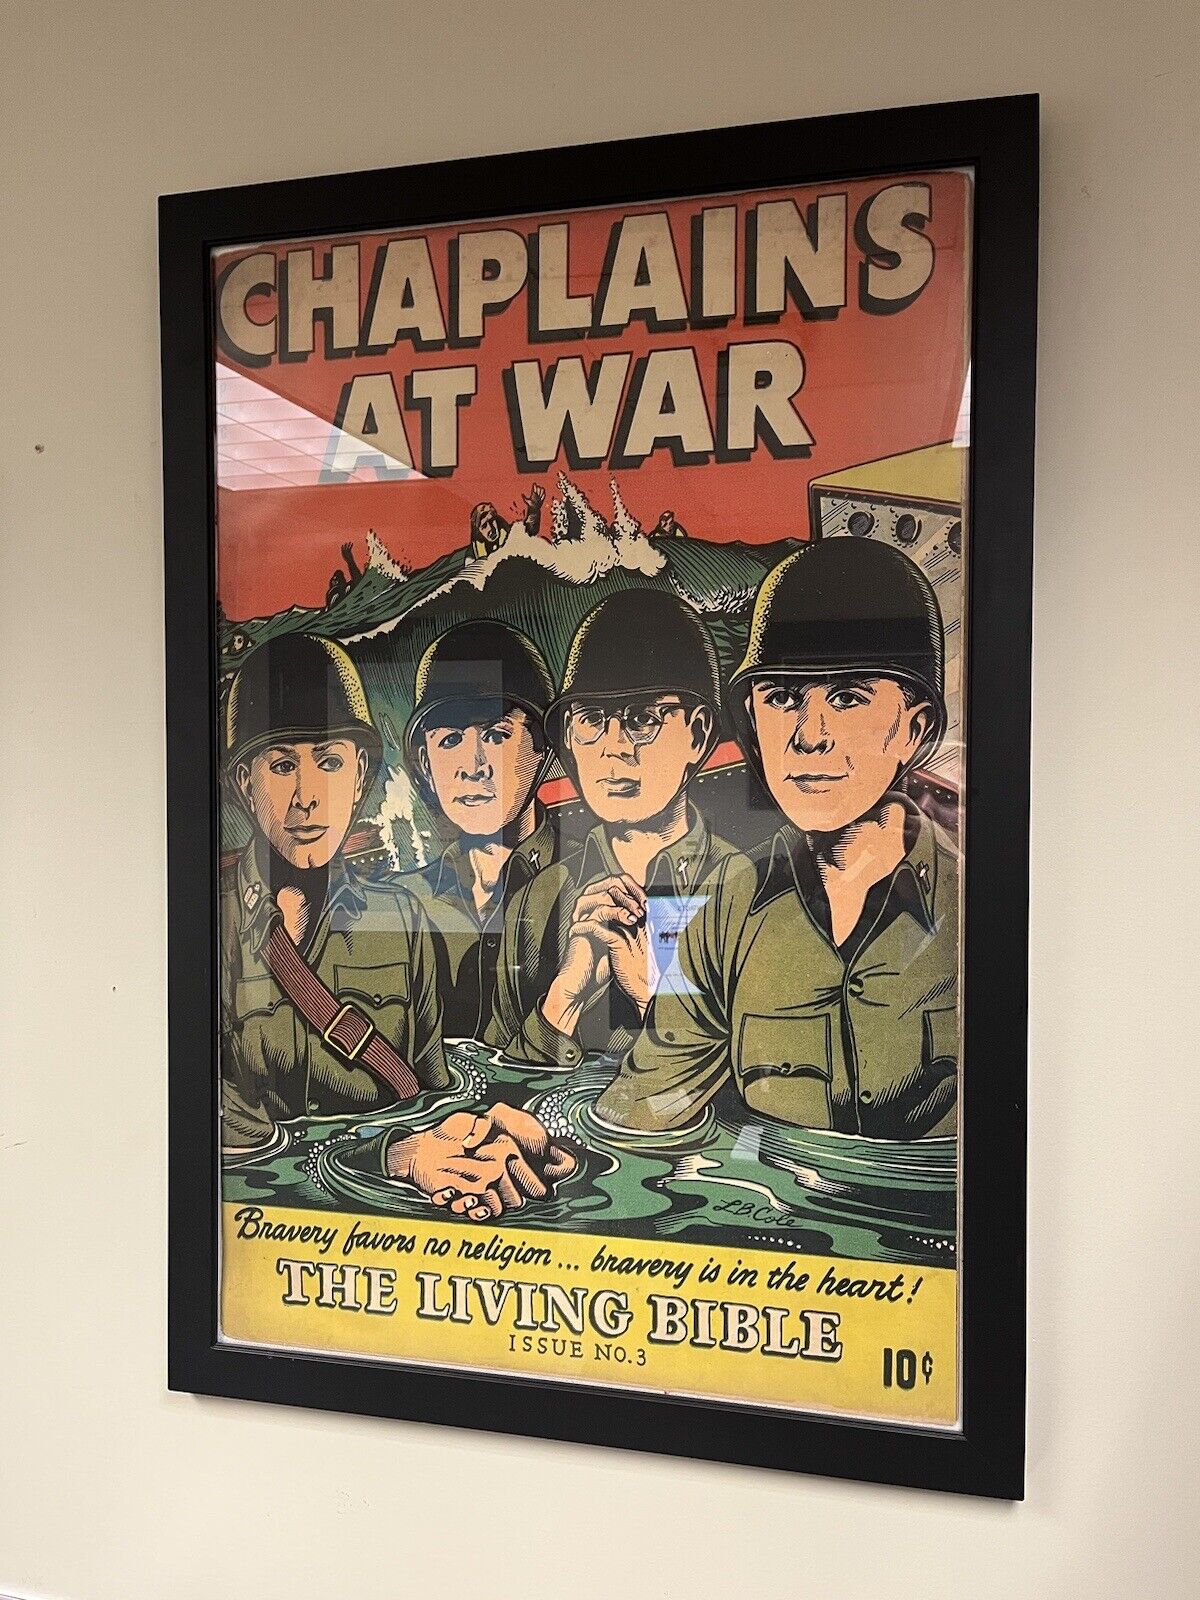 Four Chaplains: Chaplains At War Poster